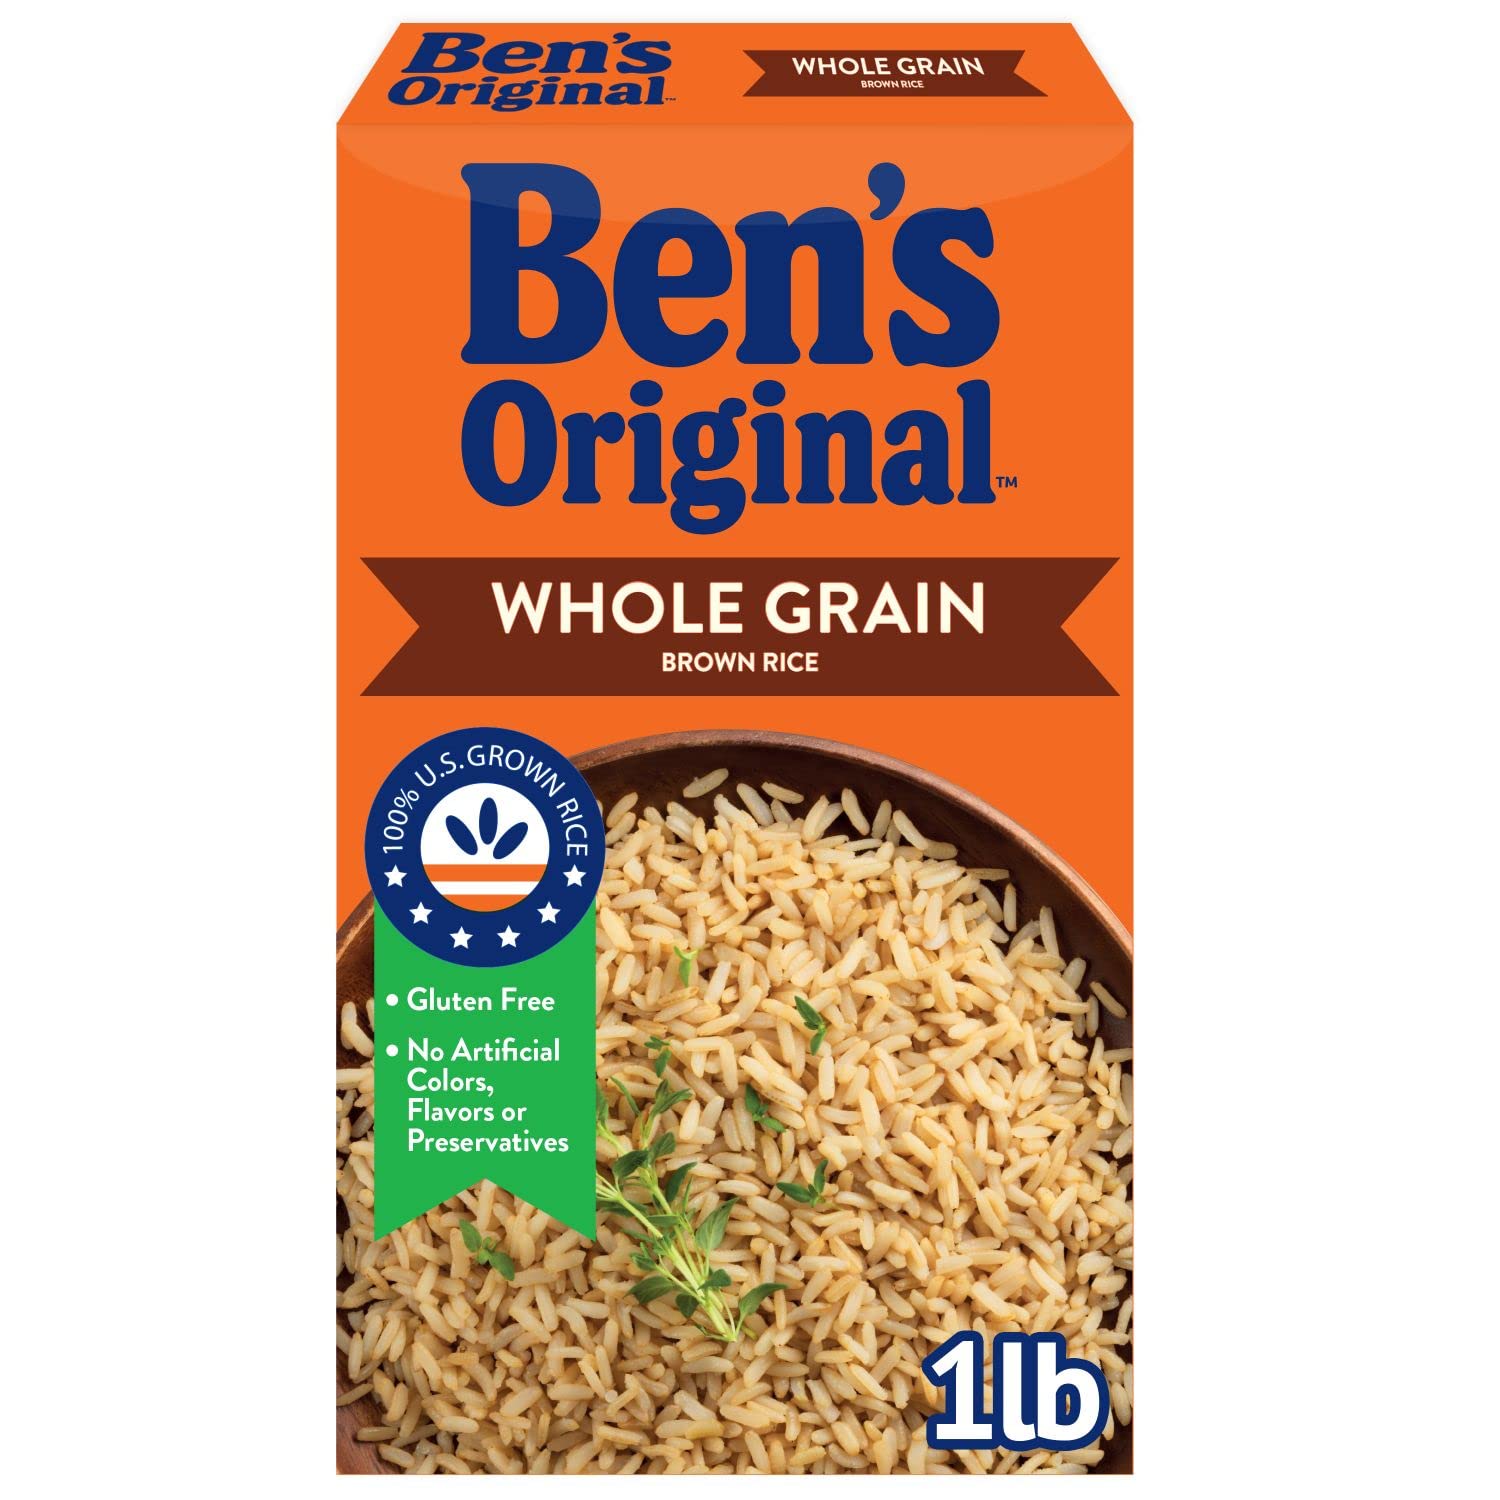 BEN'S ORIGINAL Whole Grain Brown Rice, Boxed Rice, 1 LB Box (Pack of 12)